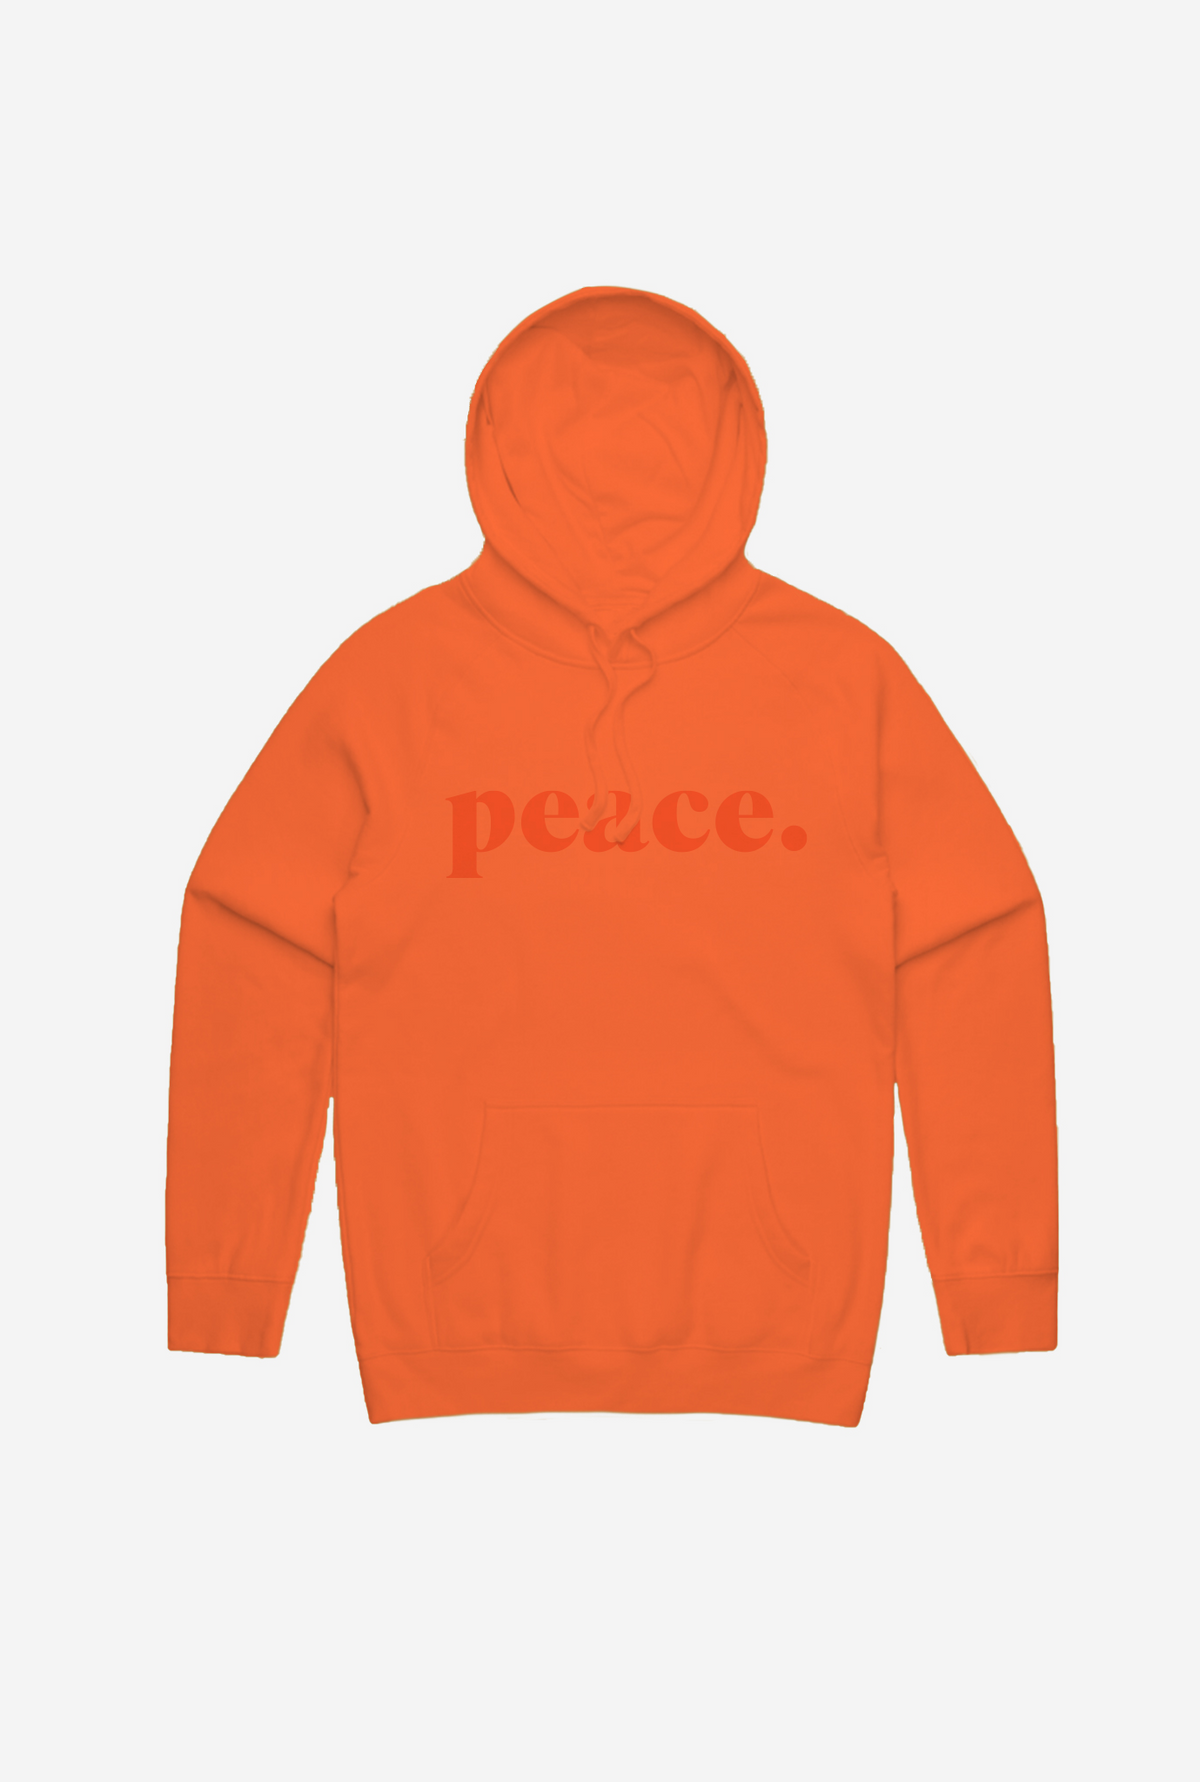 Peace Tonal Hoodie - Neon Orange